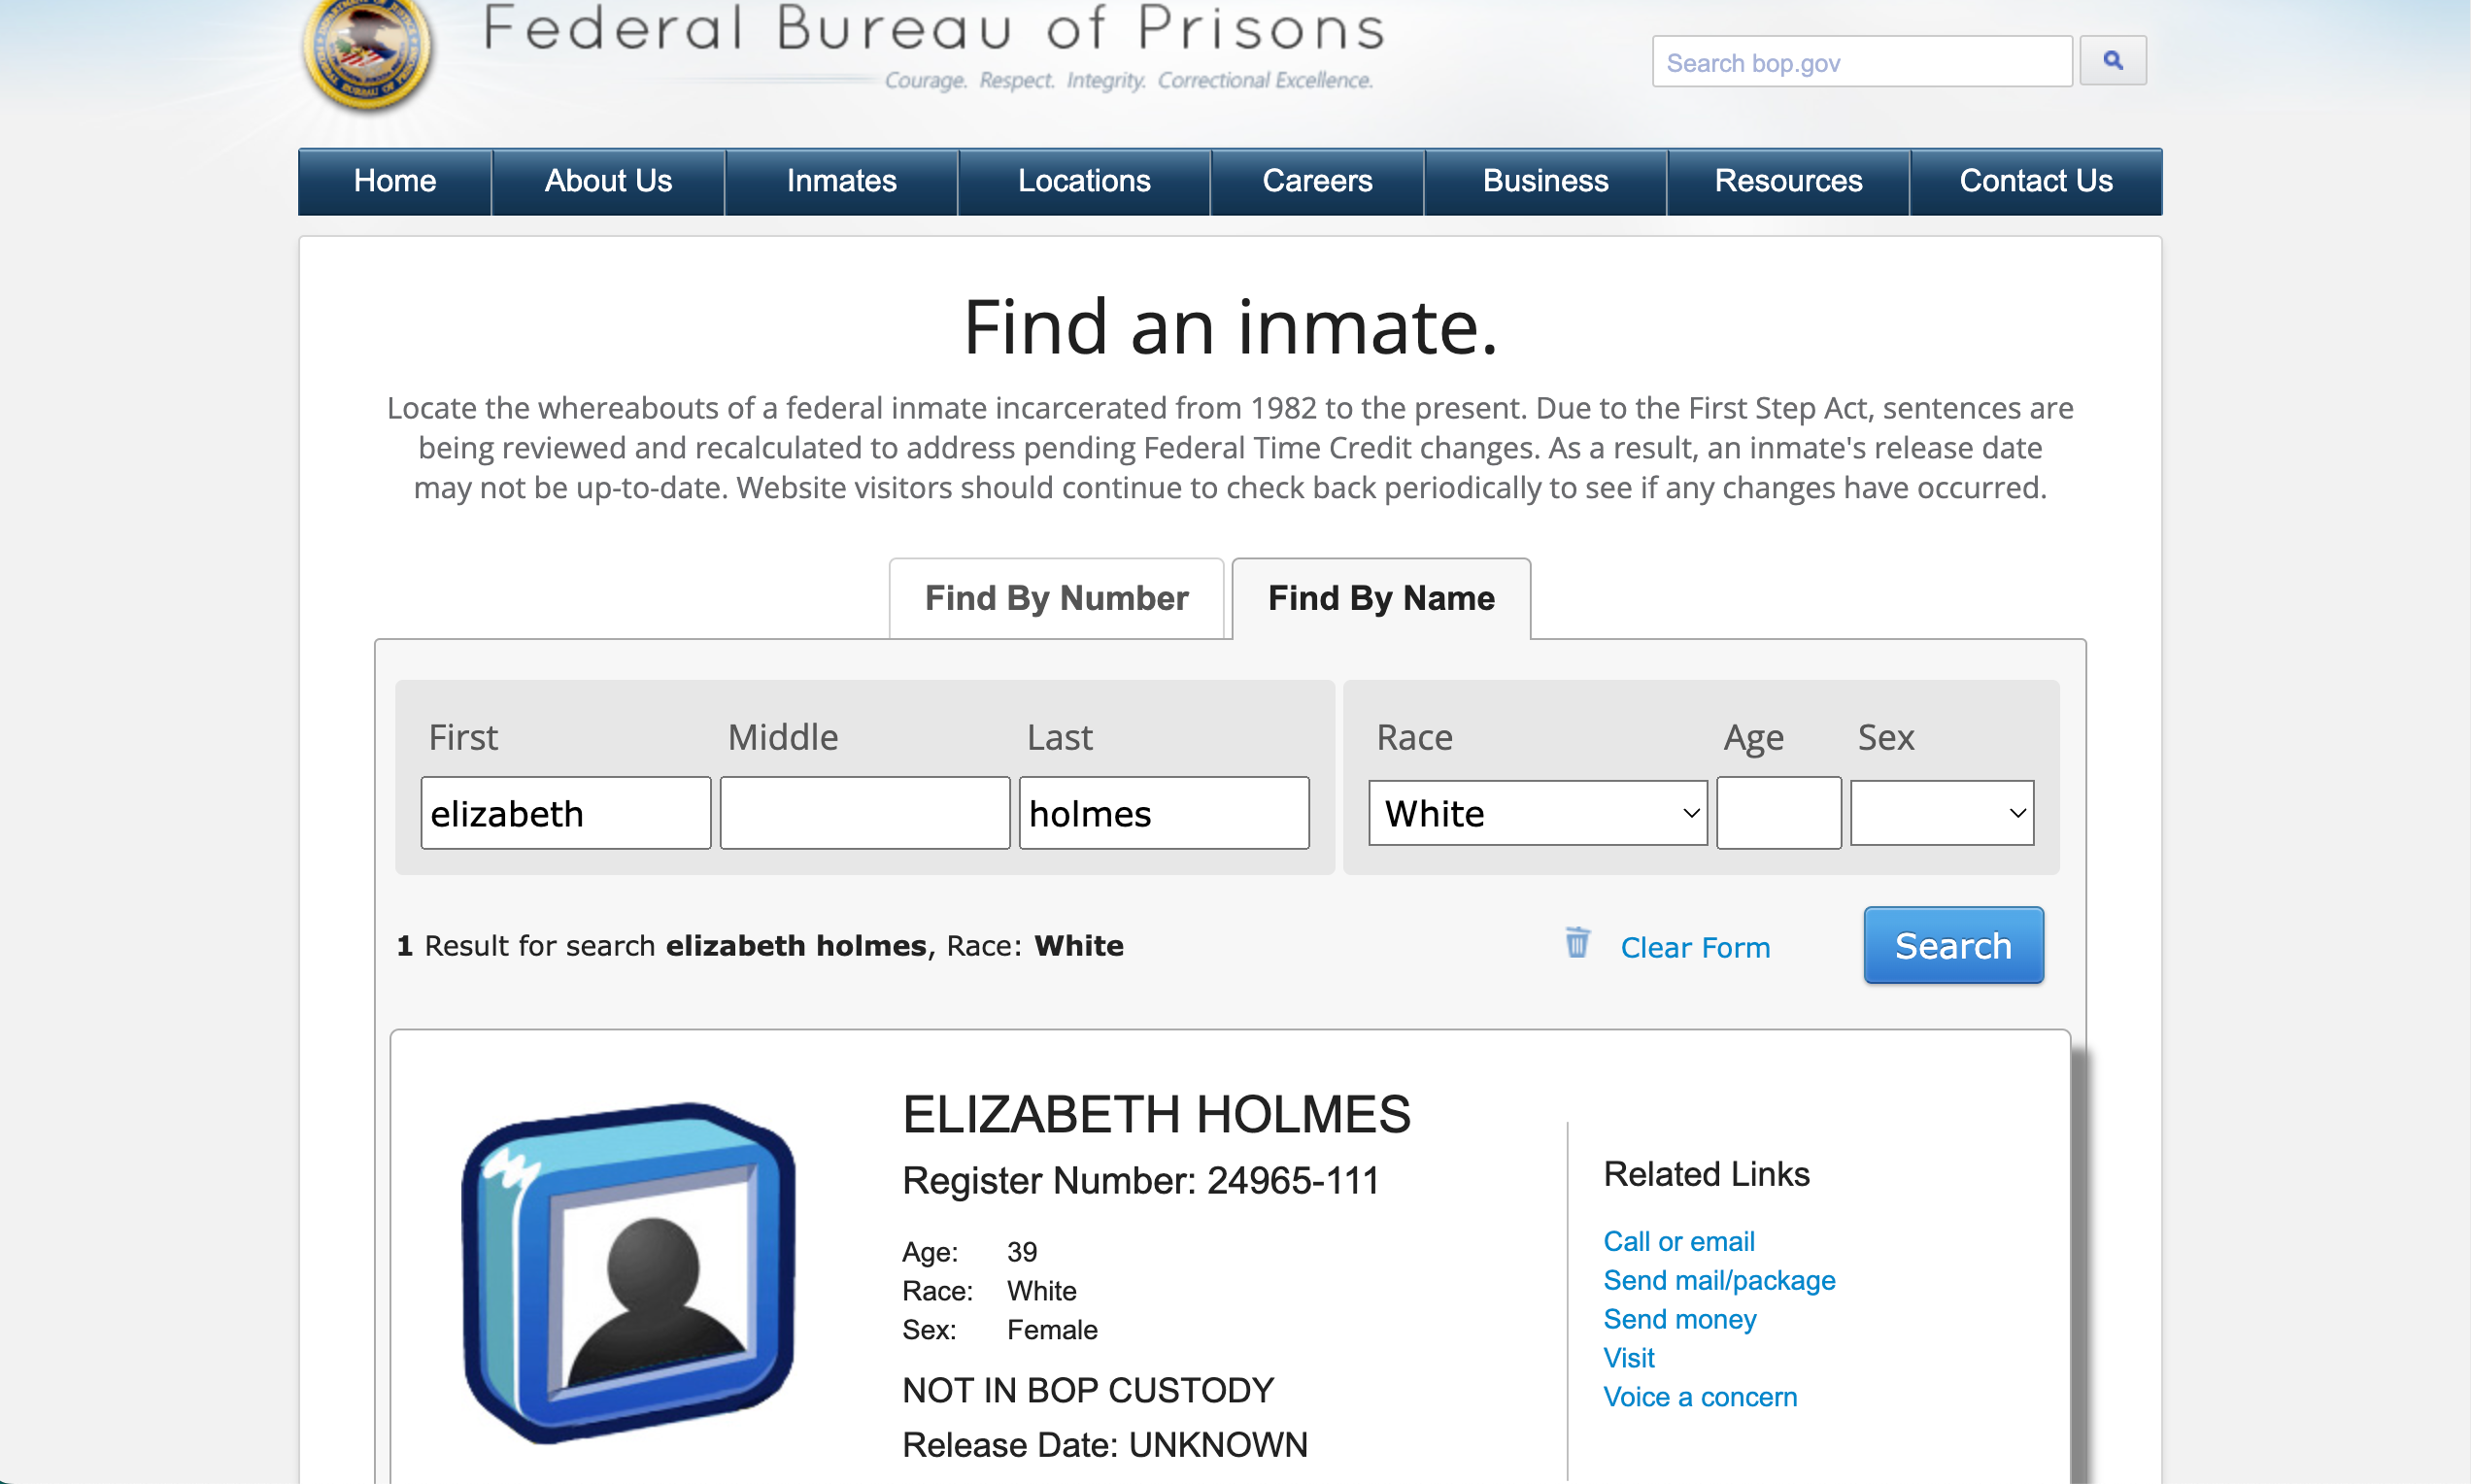 Elizabeth holmes in jail